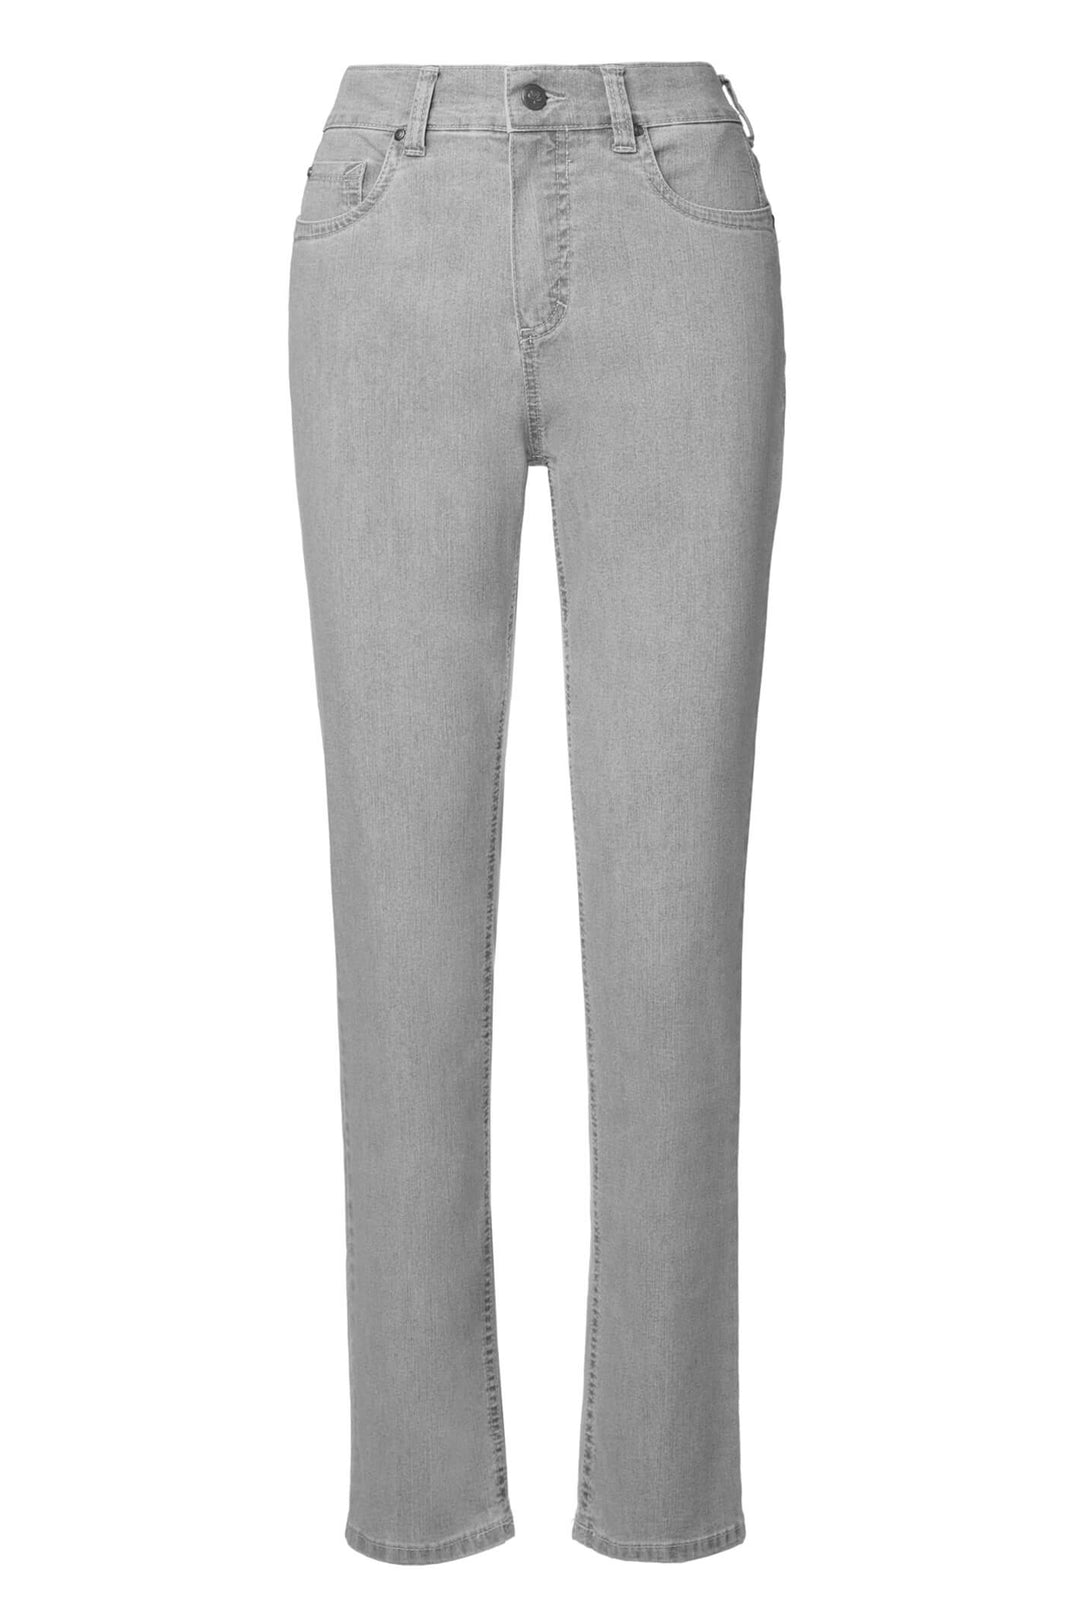 Anna Montana Dora 4014 Silver Grey 33 Comfort Fit Jeans - Shirley Allum Boutique